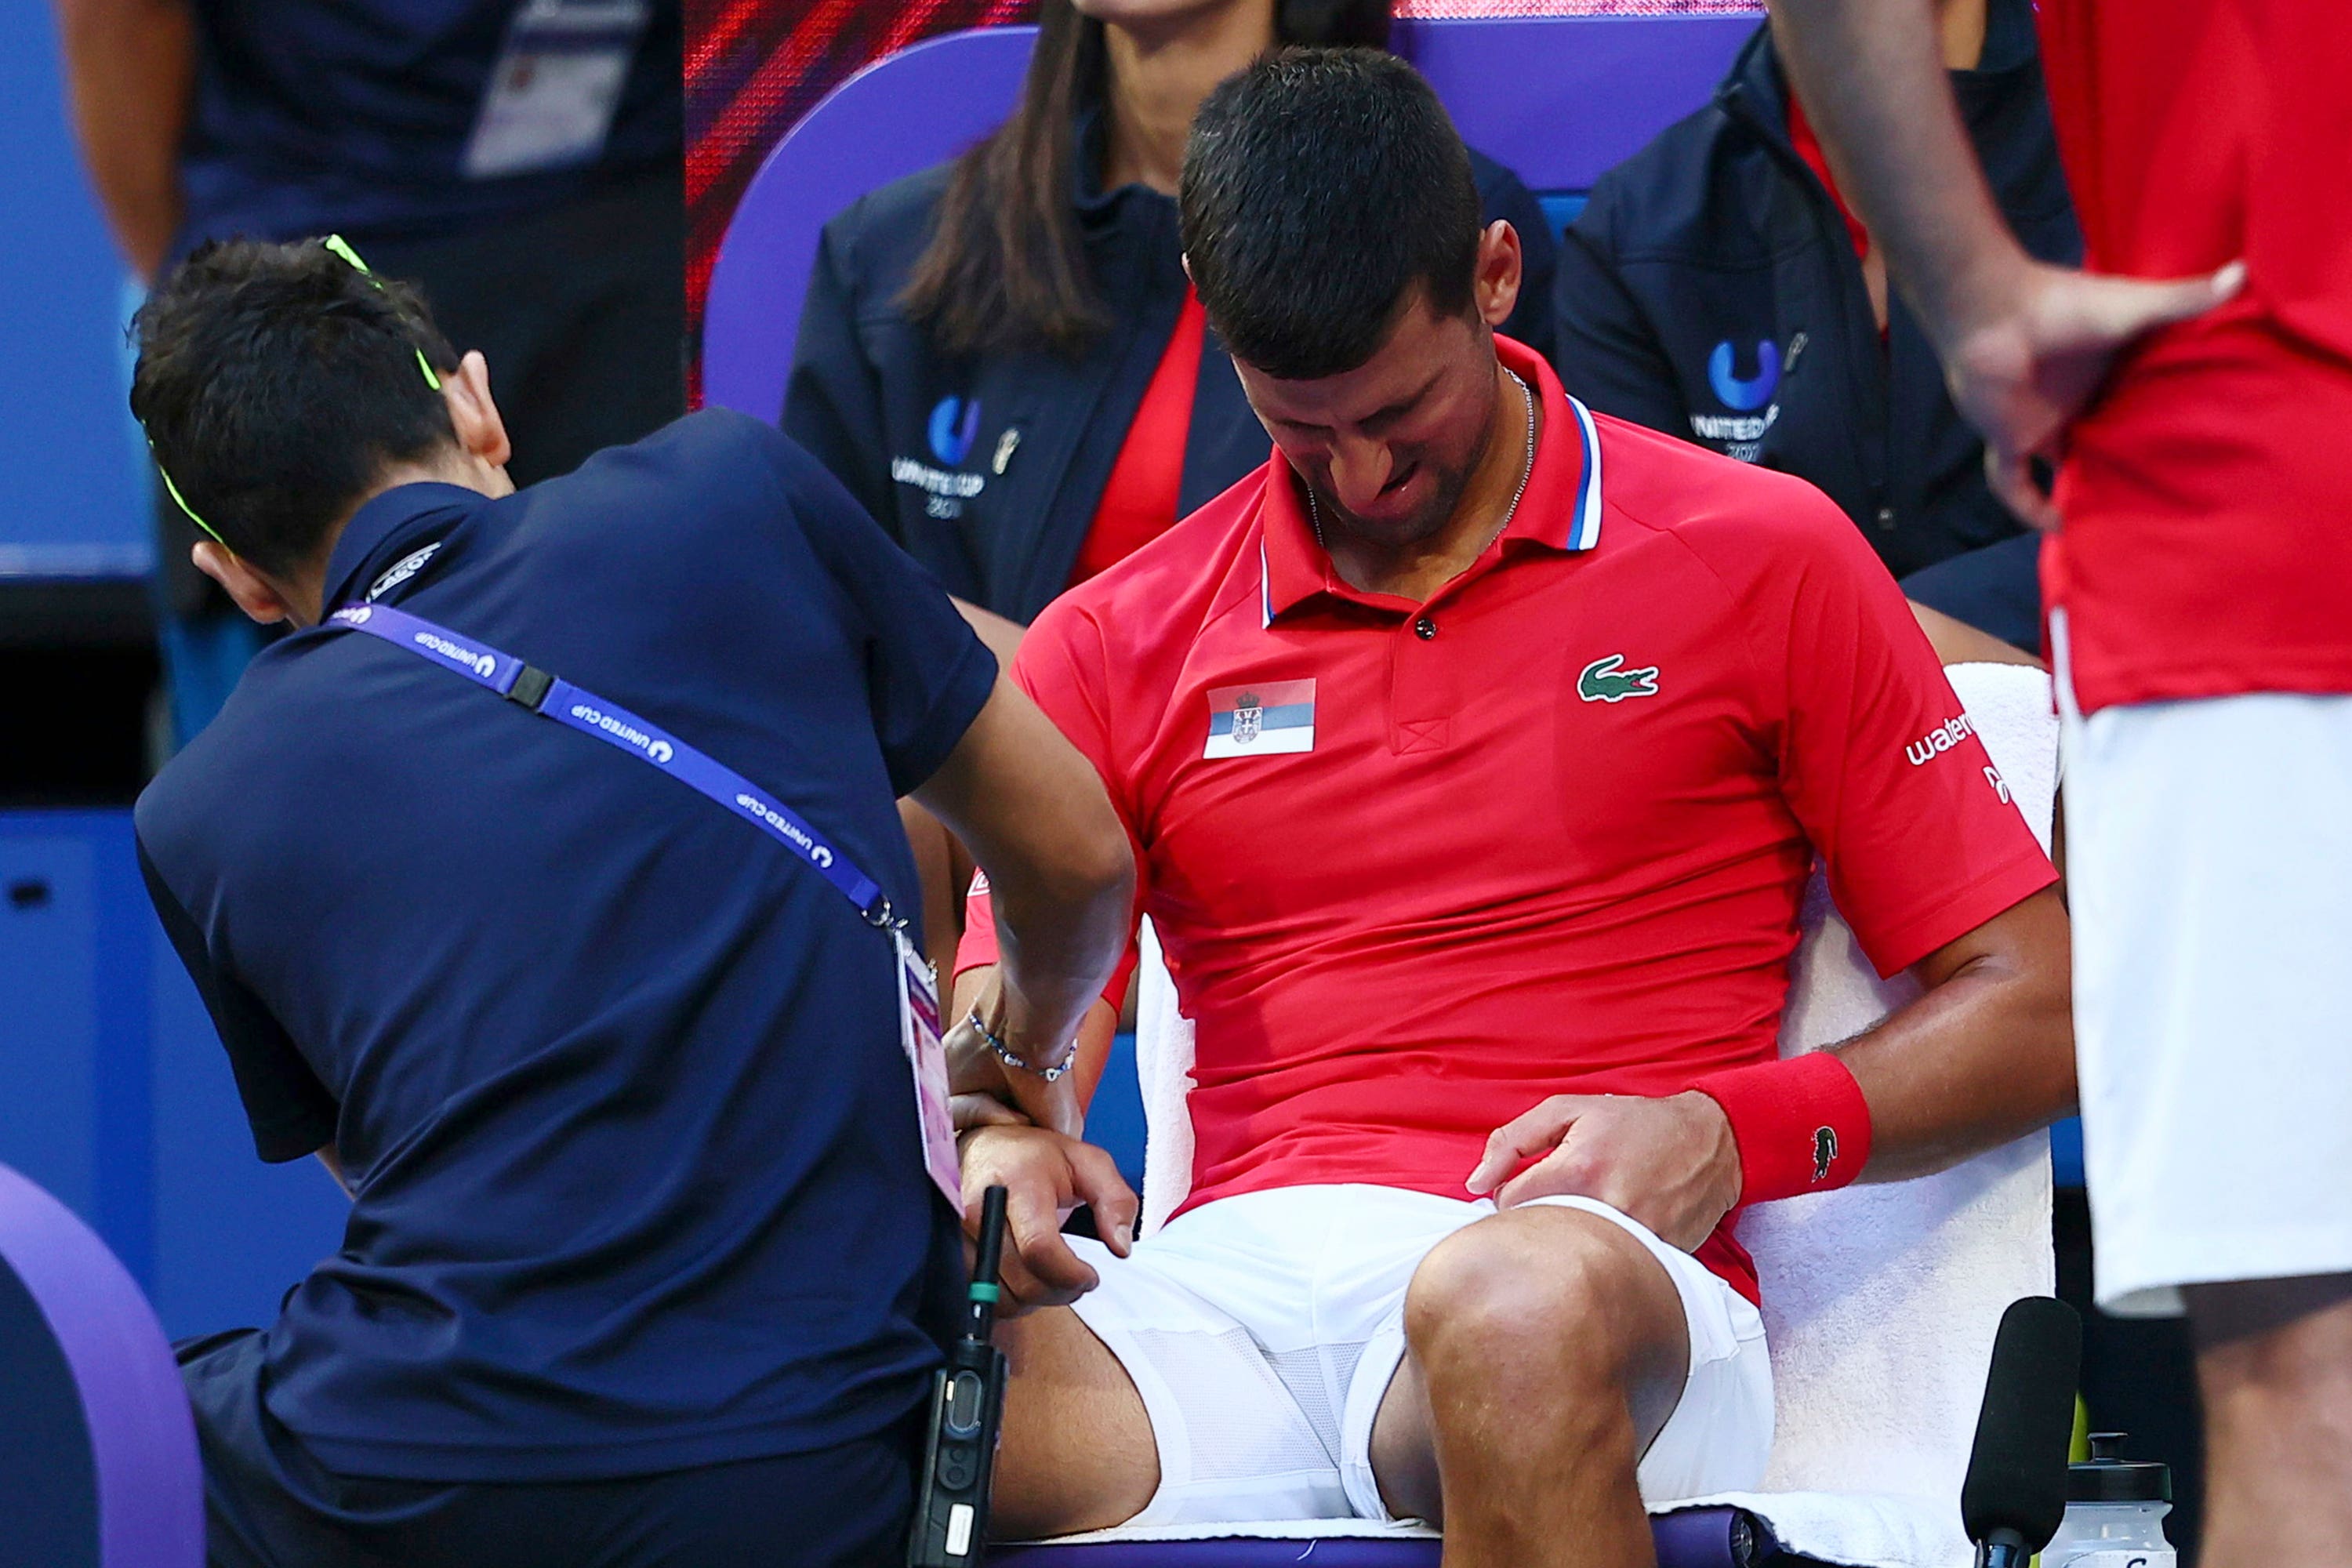 Novak Djokovic is battling an ongoing wrist injury